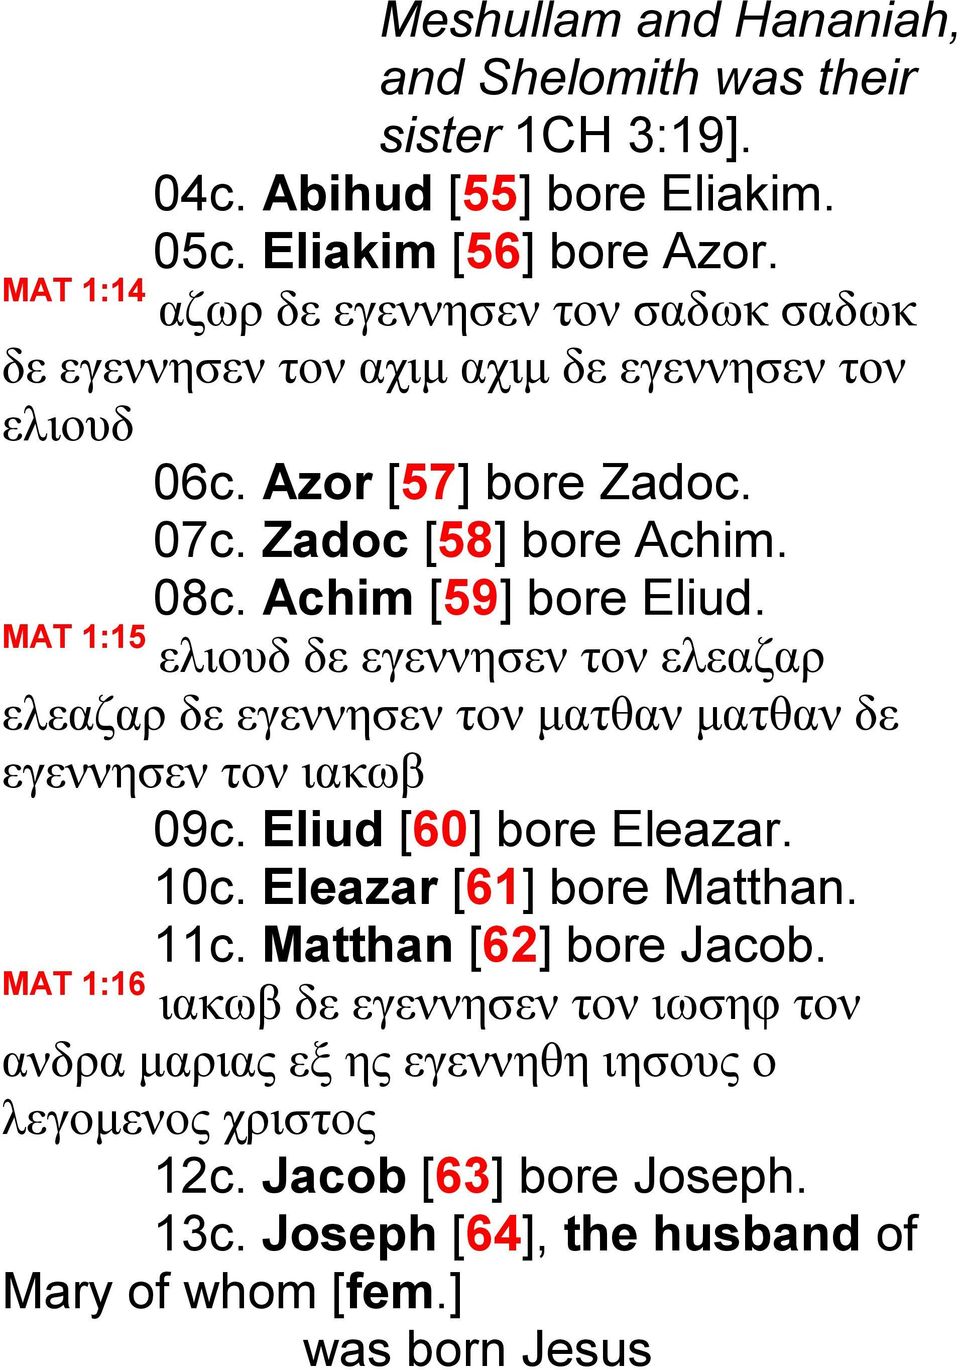 Achim [59] bore Eliud. MAT 1:15 ελιουδ δε εγεννησεν τον ελεαζαρ ελεαζαρ δε εγεννησεν τον ματθαν ματθαν δε εγεννησεν τον ιακωβ 09c. Eliud [60] bore Eleazar. 10c.